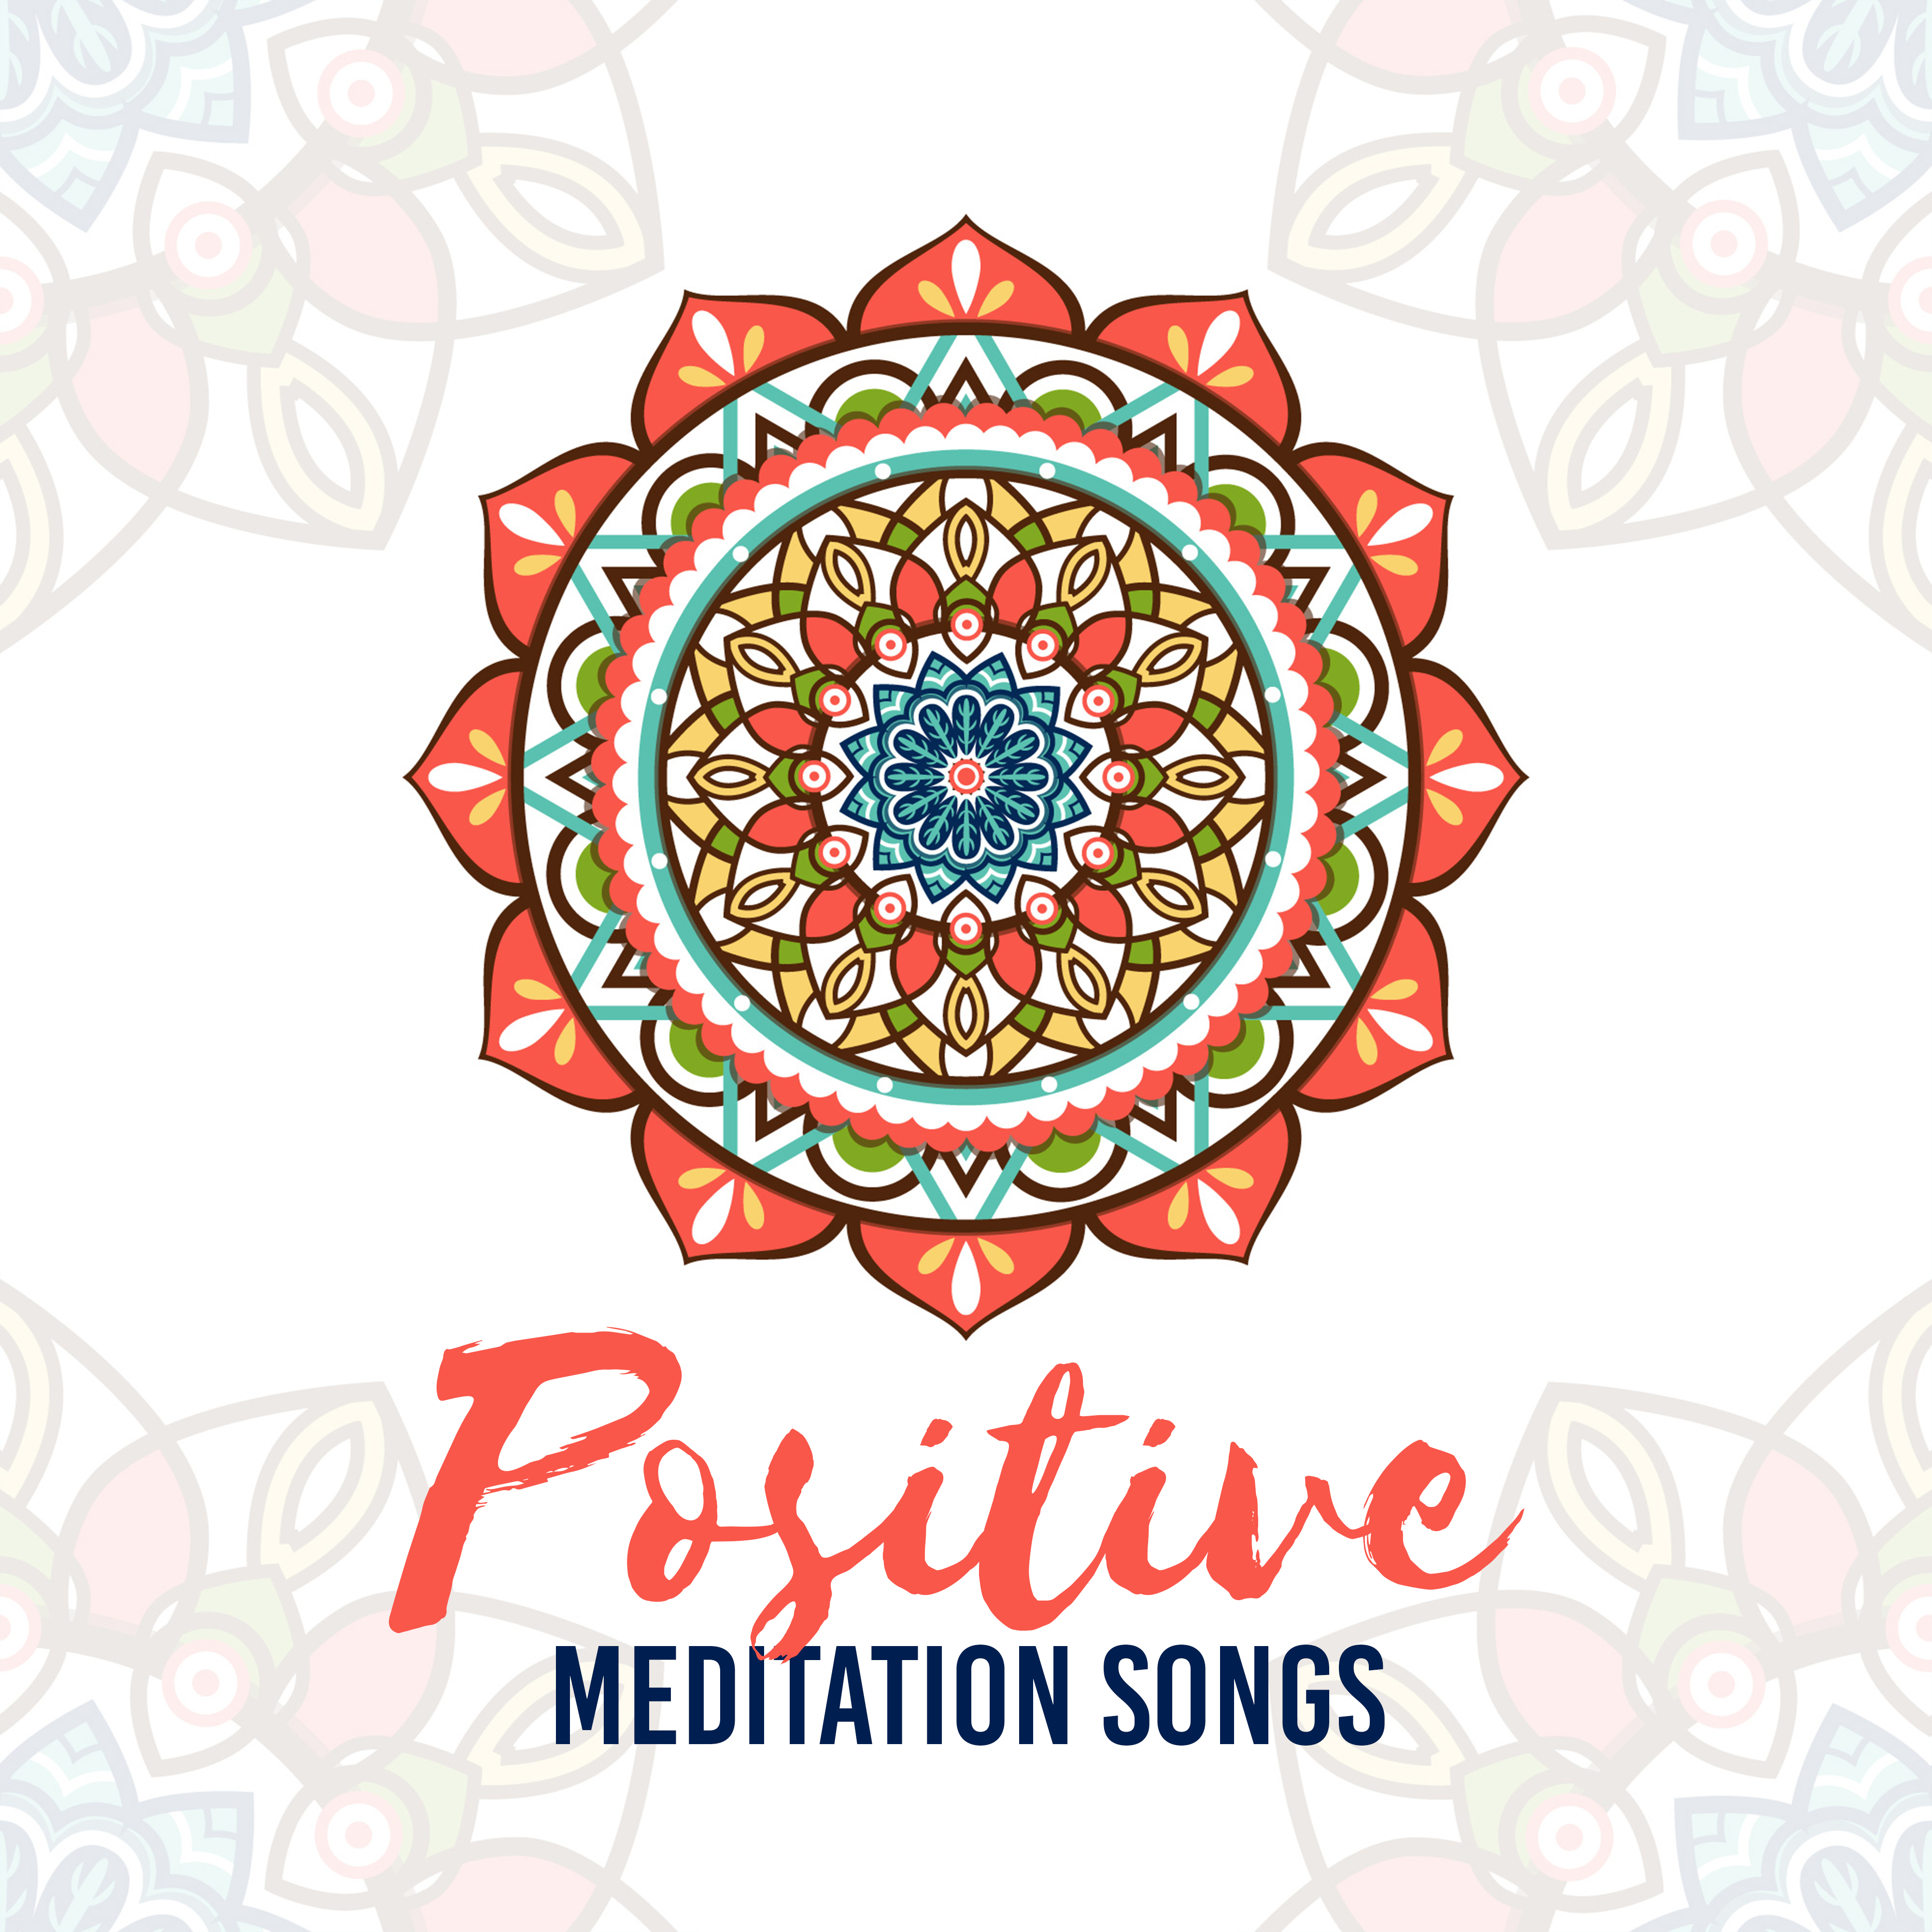 Positive Meditation Songs